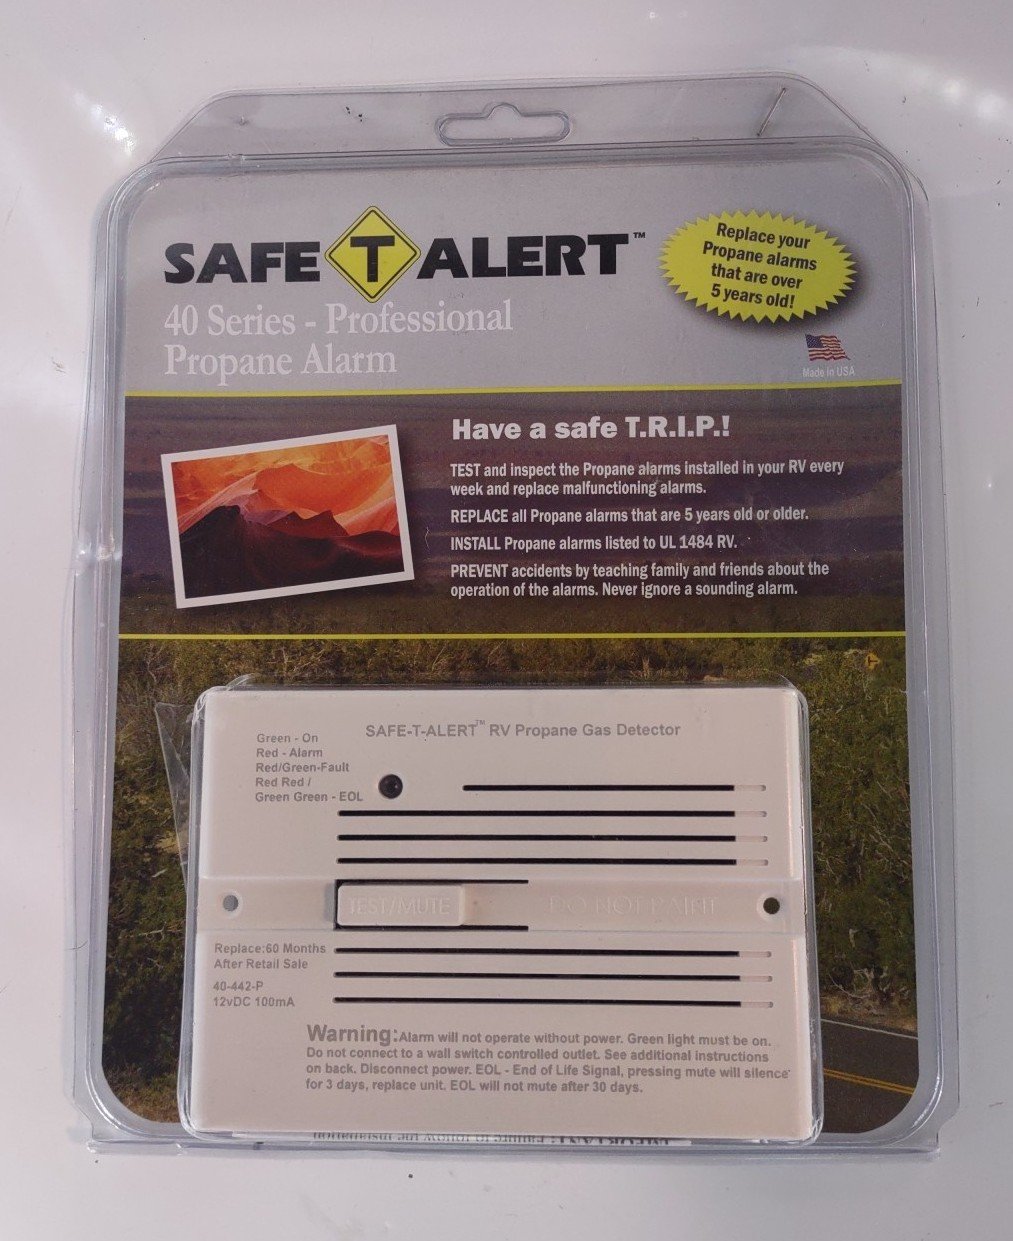 Safe T Alert RV Trailer Camper Lp Gas Alarm Flush Mount White 40-442-P-WT H5zVoij7d